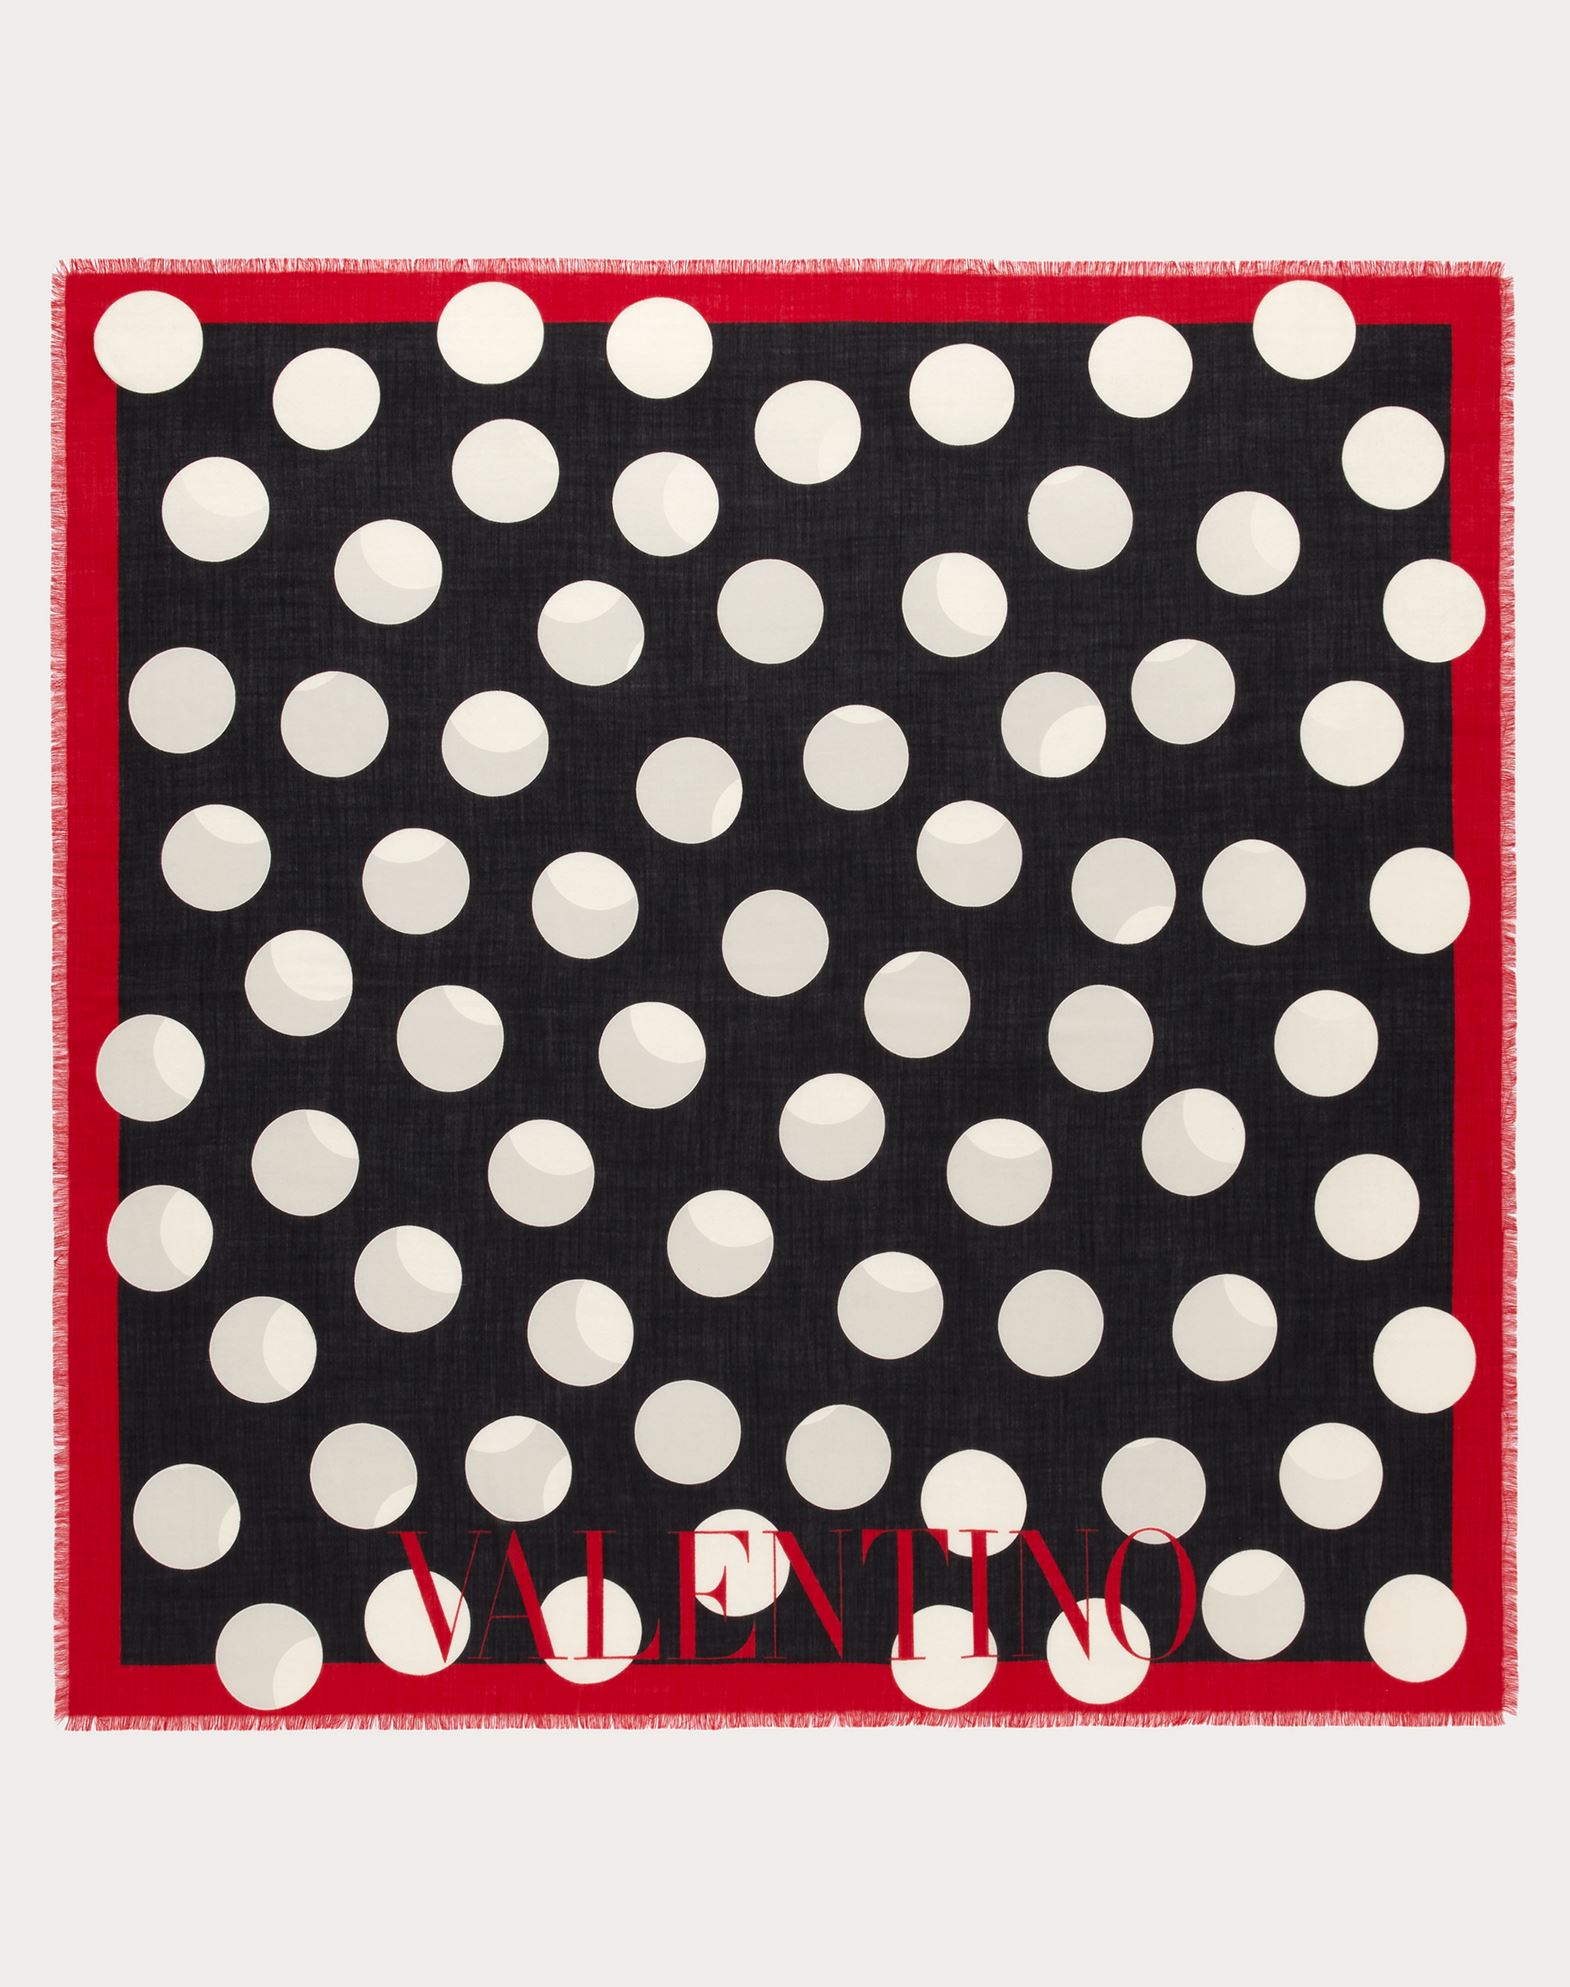 Valentino Garavani Dots Print Cashmere And Silk Shawl 140x140 Cm / 55.1x55.1 In. In Black